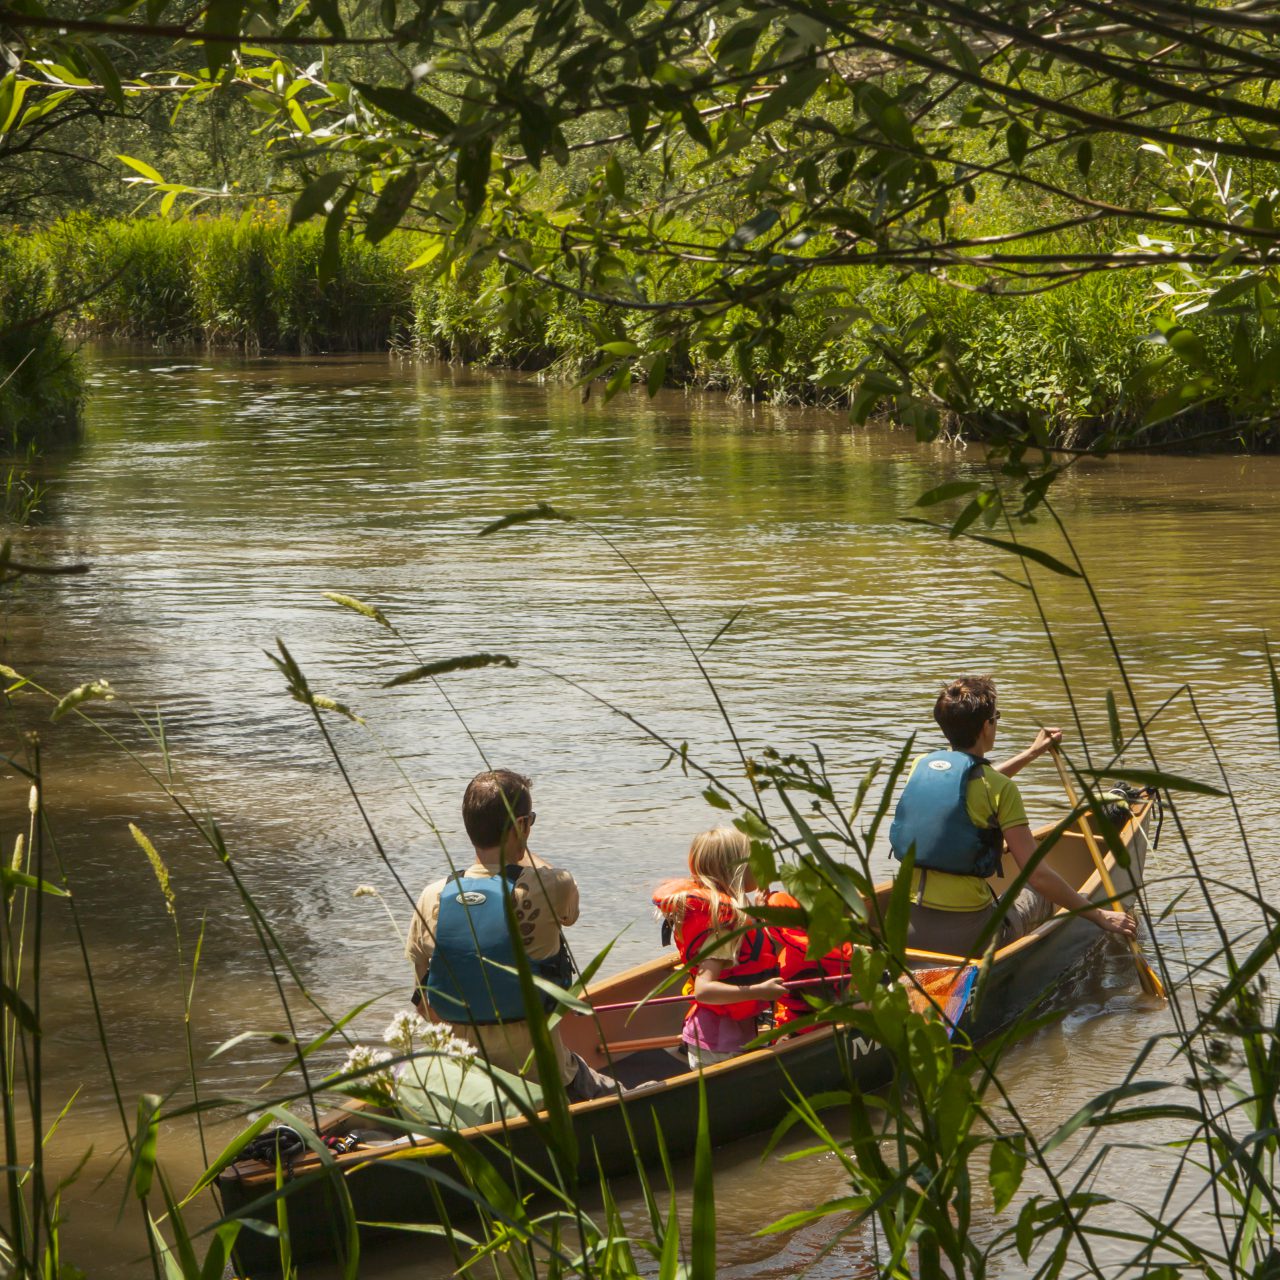 Nationaal Park de Biesbosch - Dordrecht - toerisme - kano - water - varen - kinderen